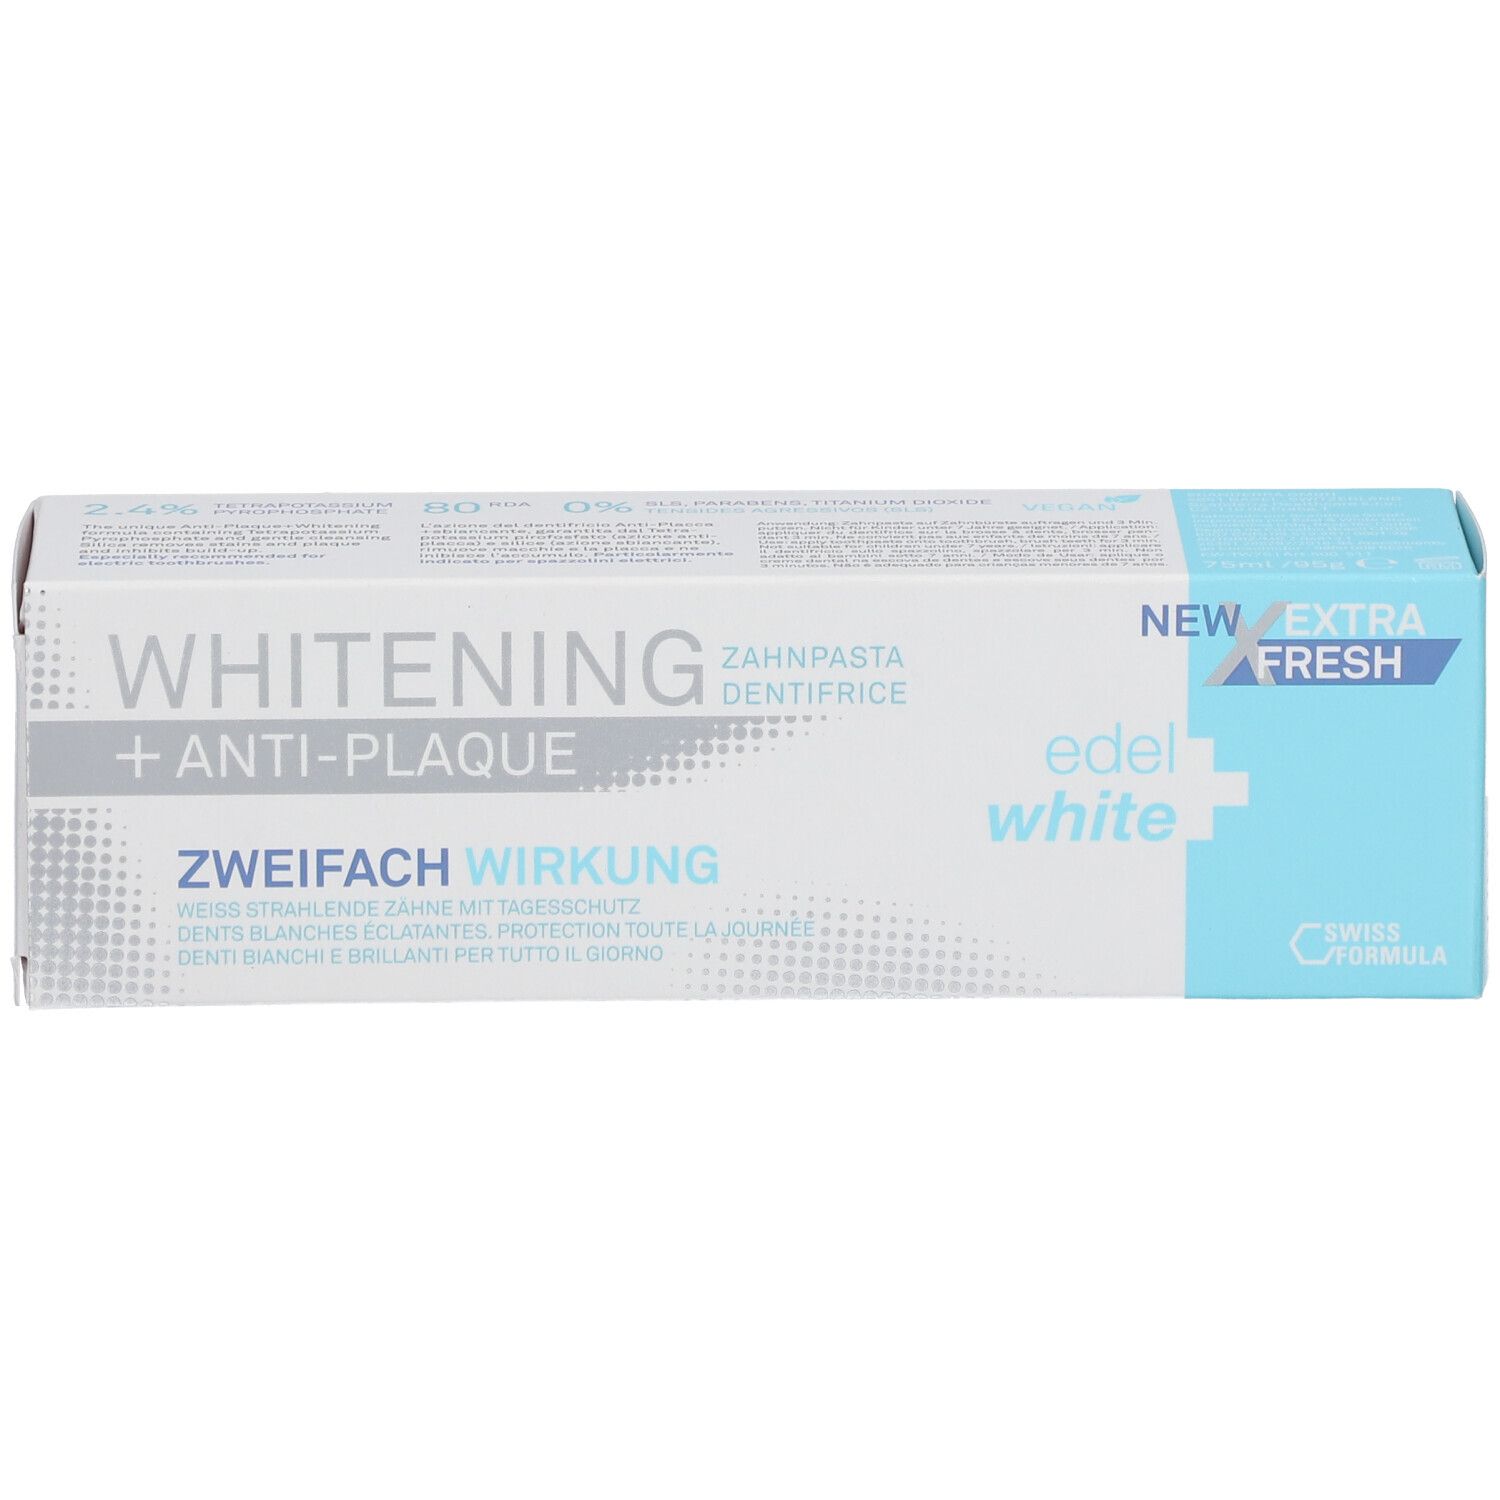 Edel white Antiplaque white